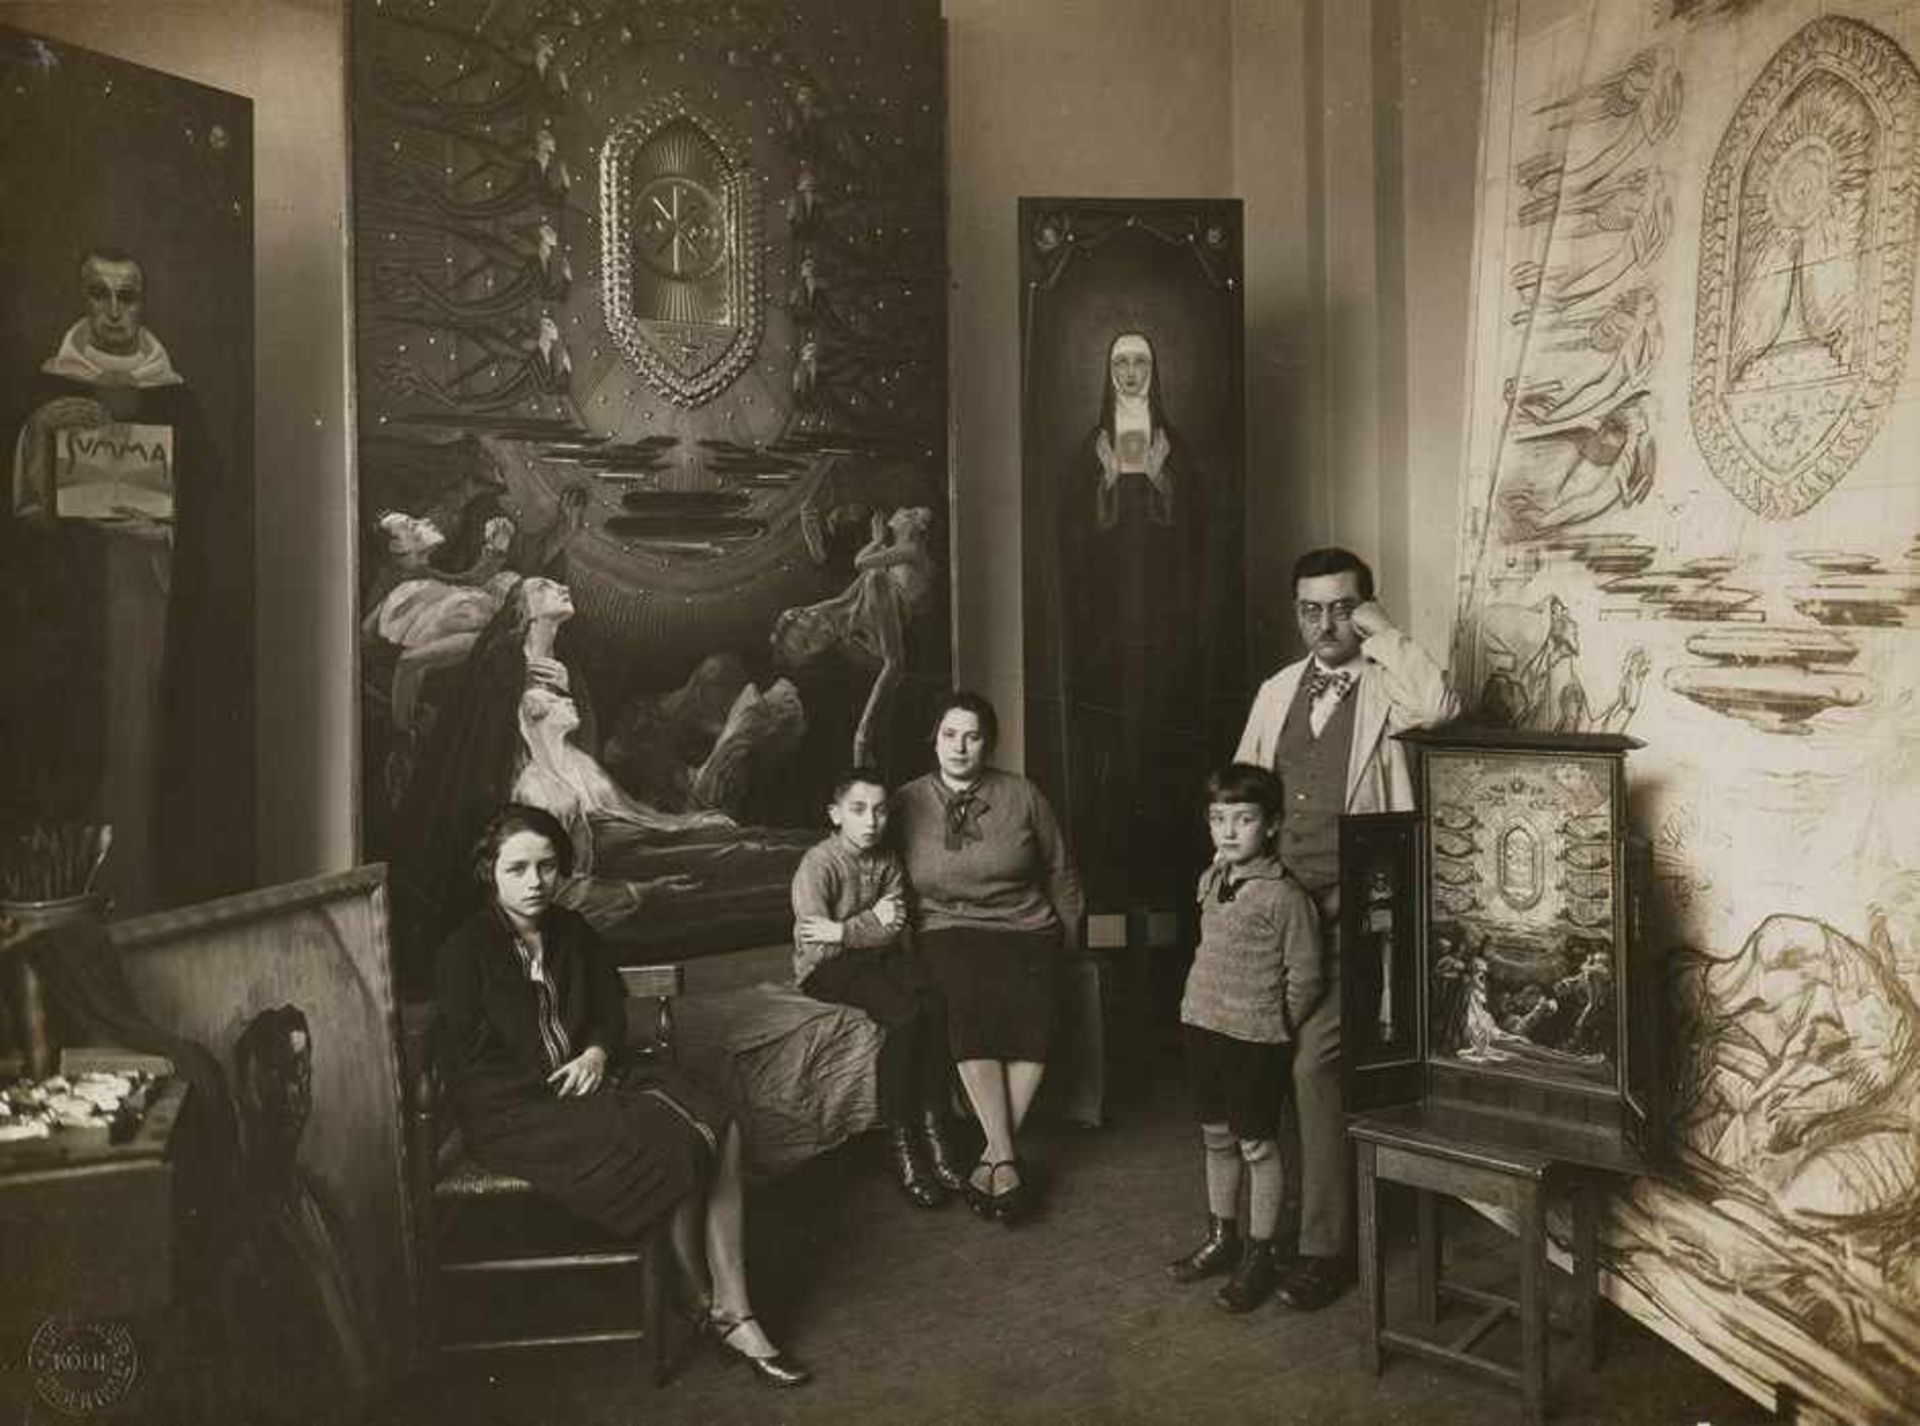 Sander, August: Portrait of the artist Robert Seuffert and his family in his studio in